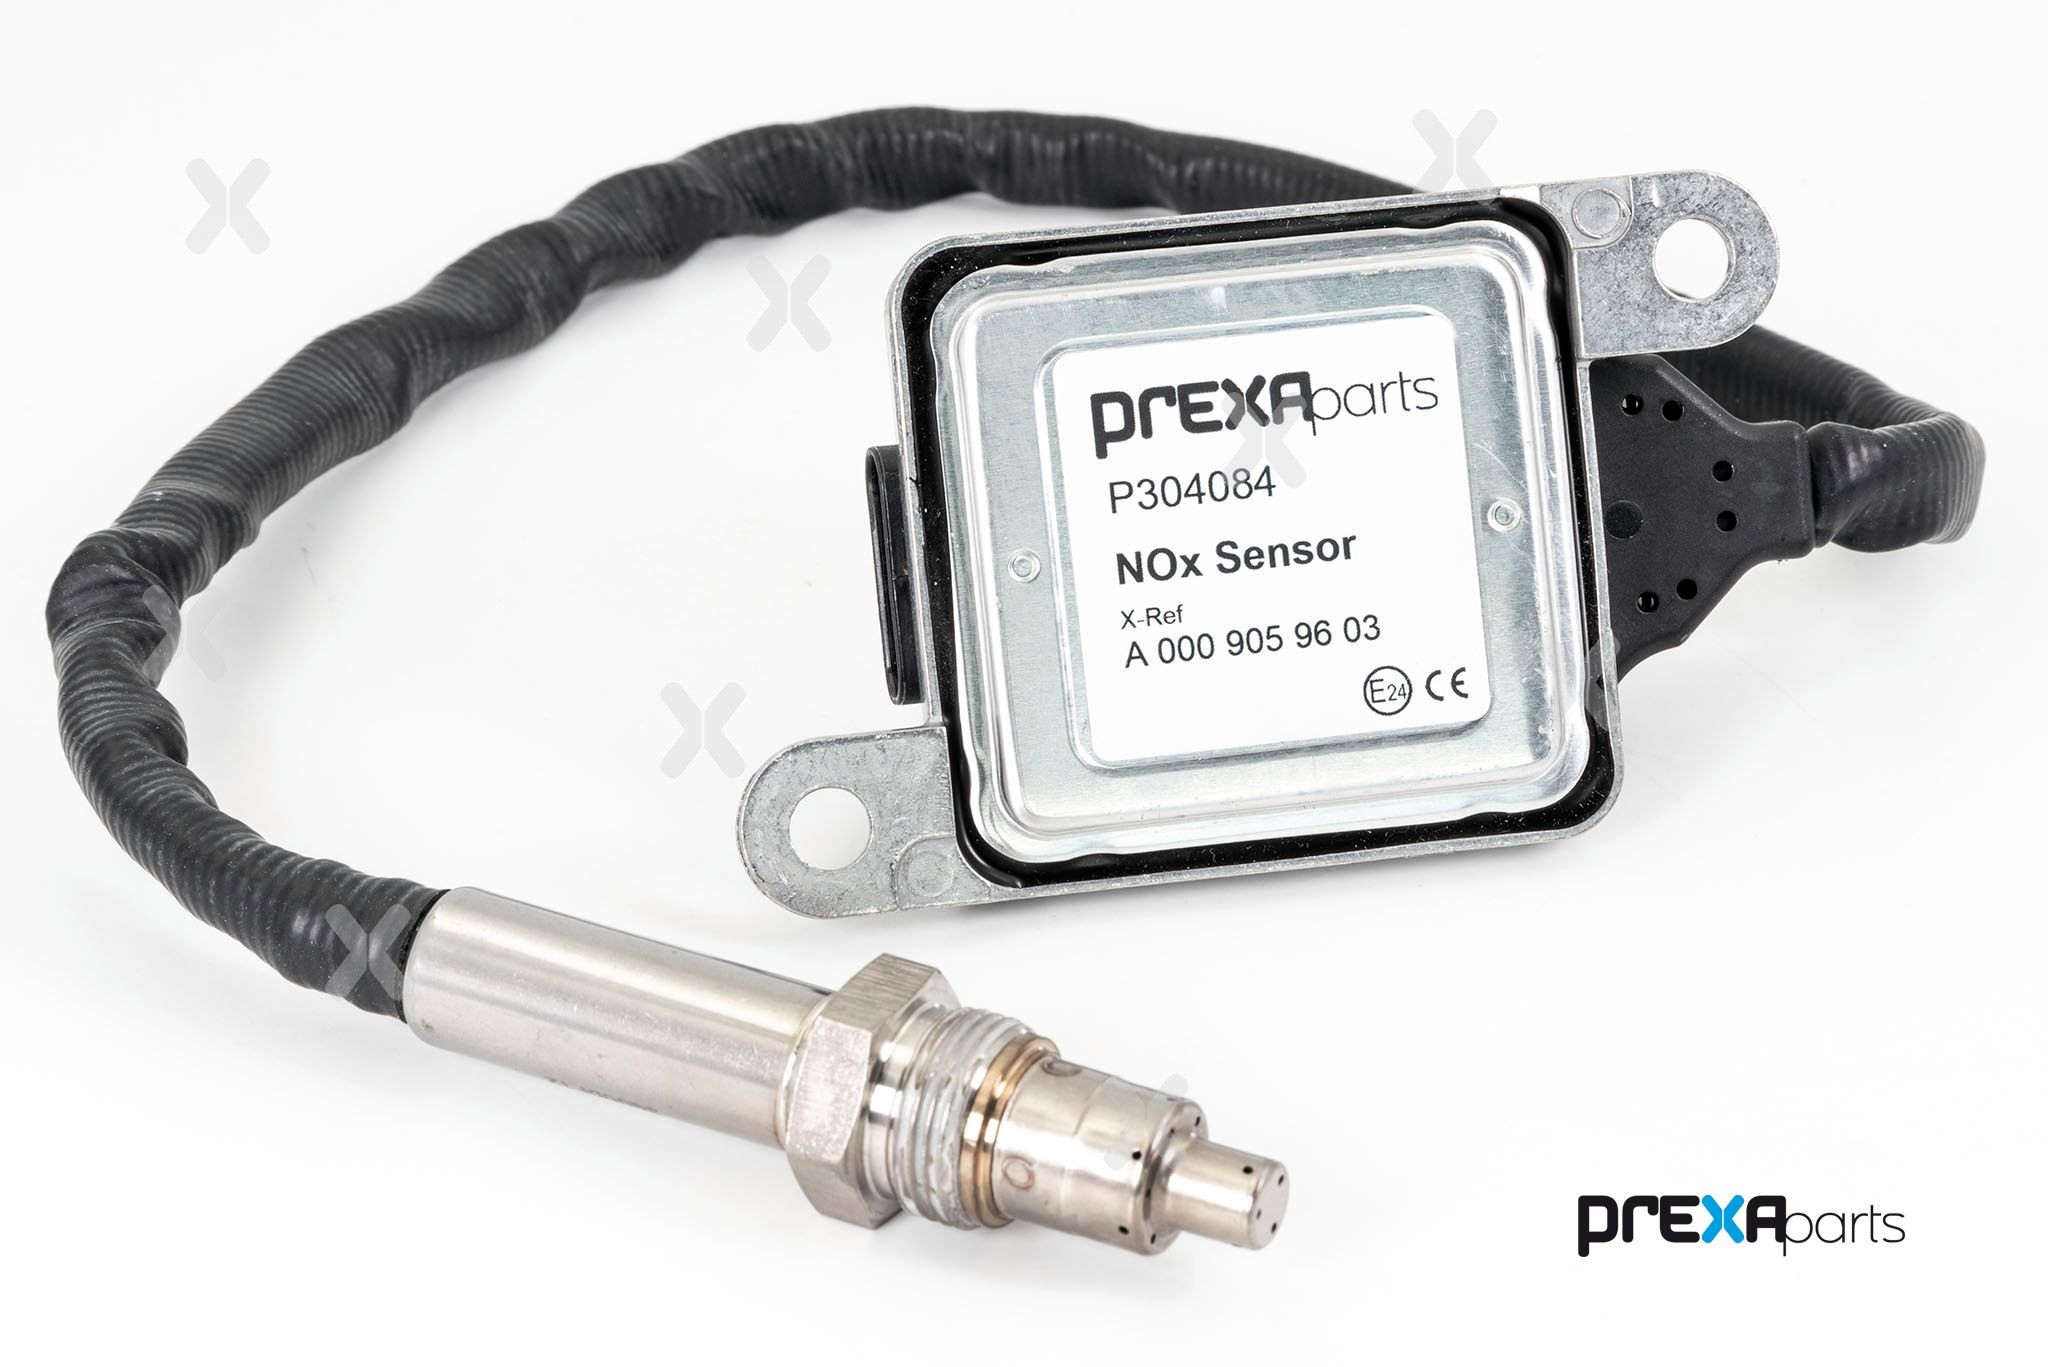 PREXAparts P304084 NOx Sensor, NOx Catalyst 000 905 9603